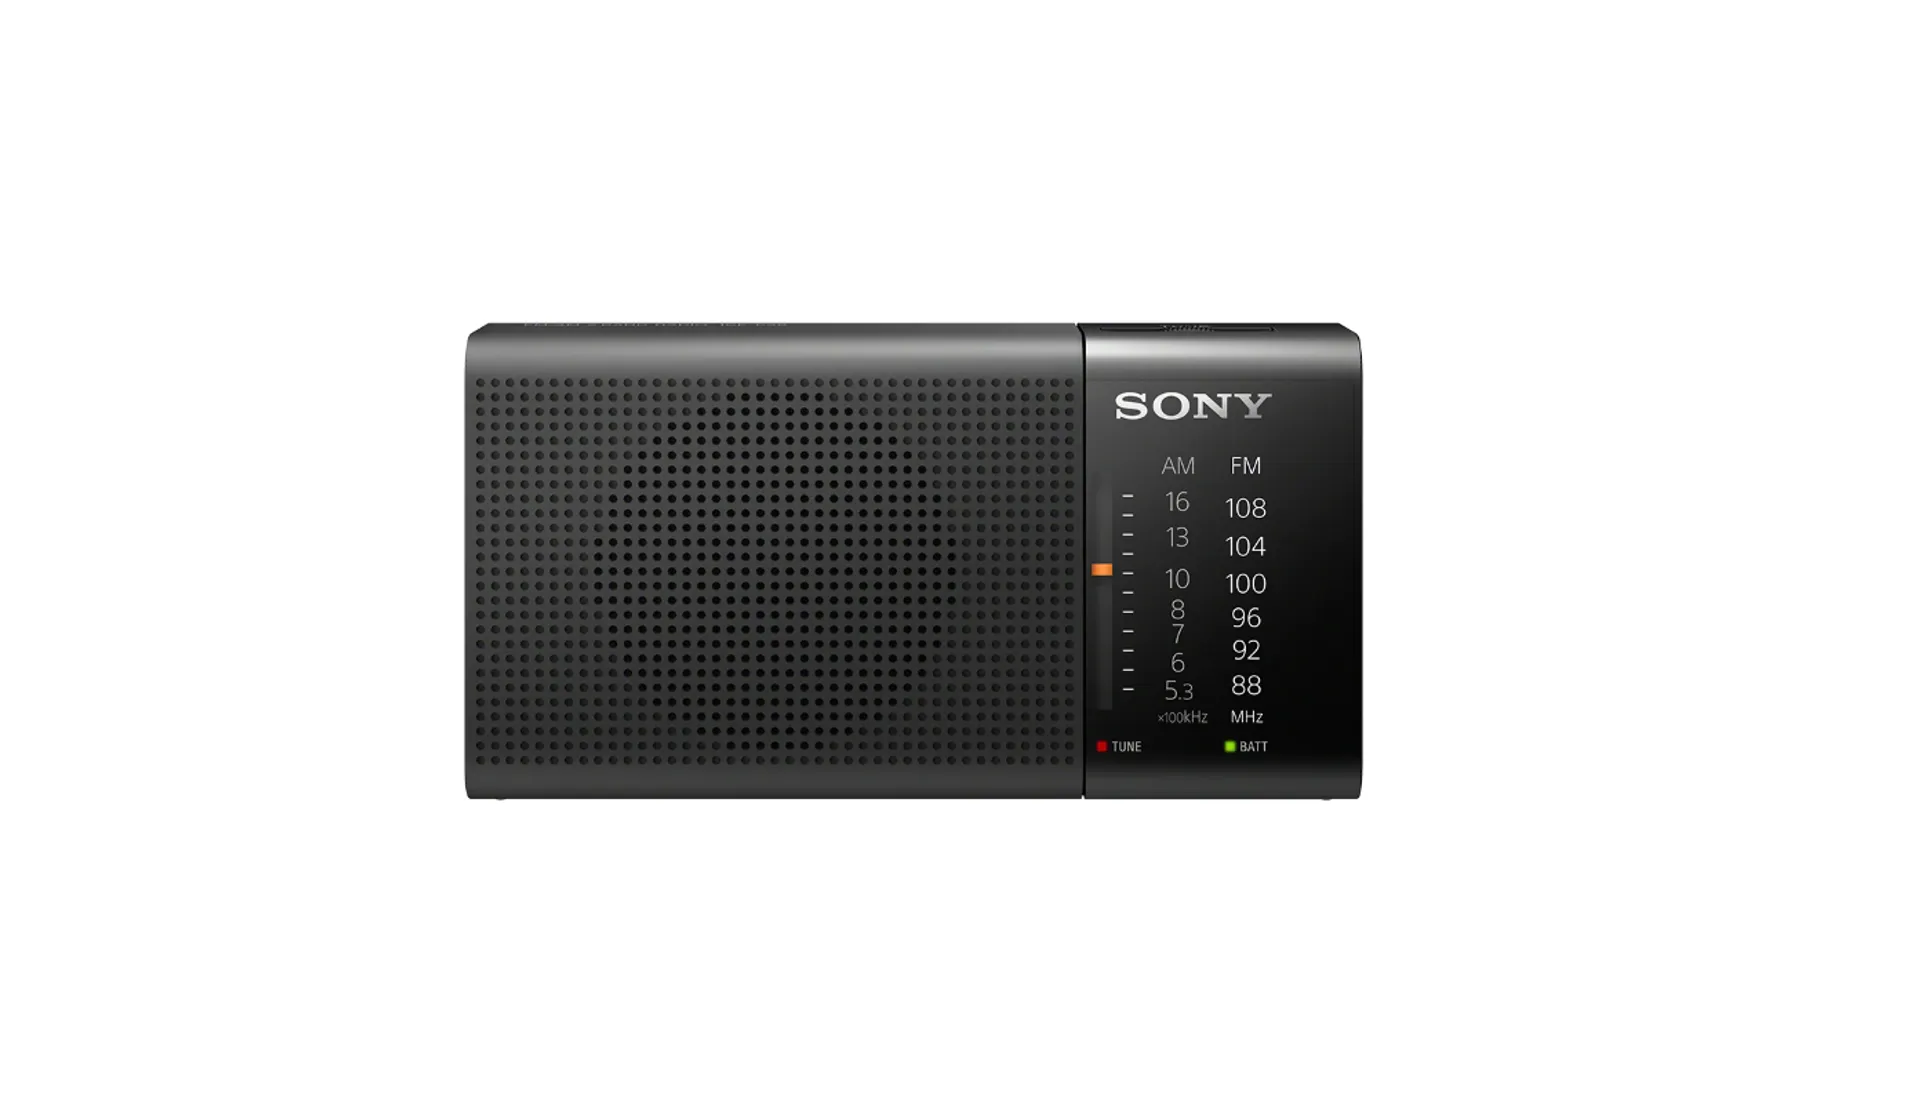 Sony ICF-P37 Radio